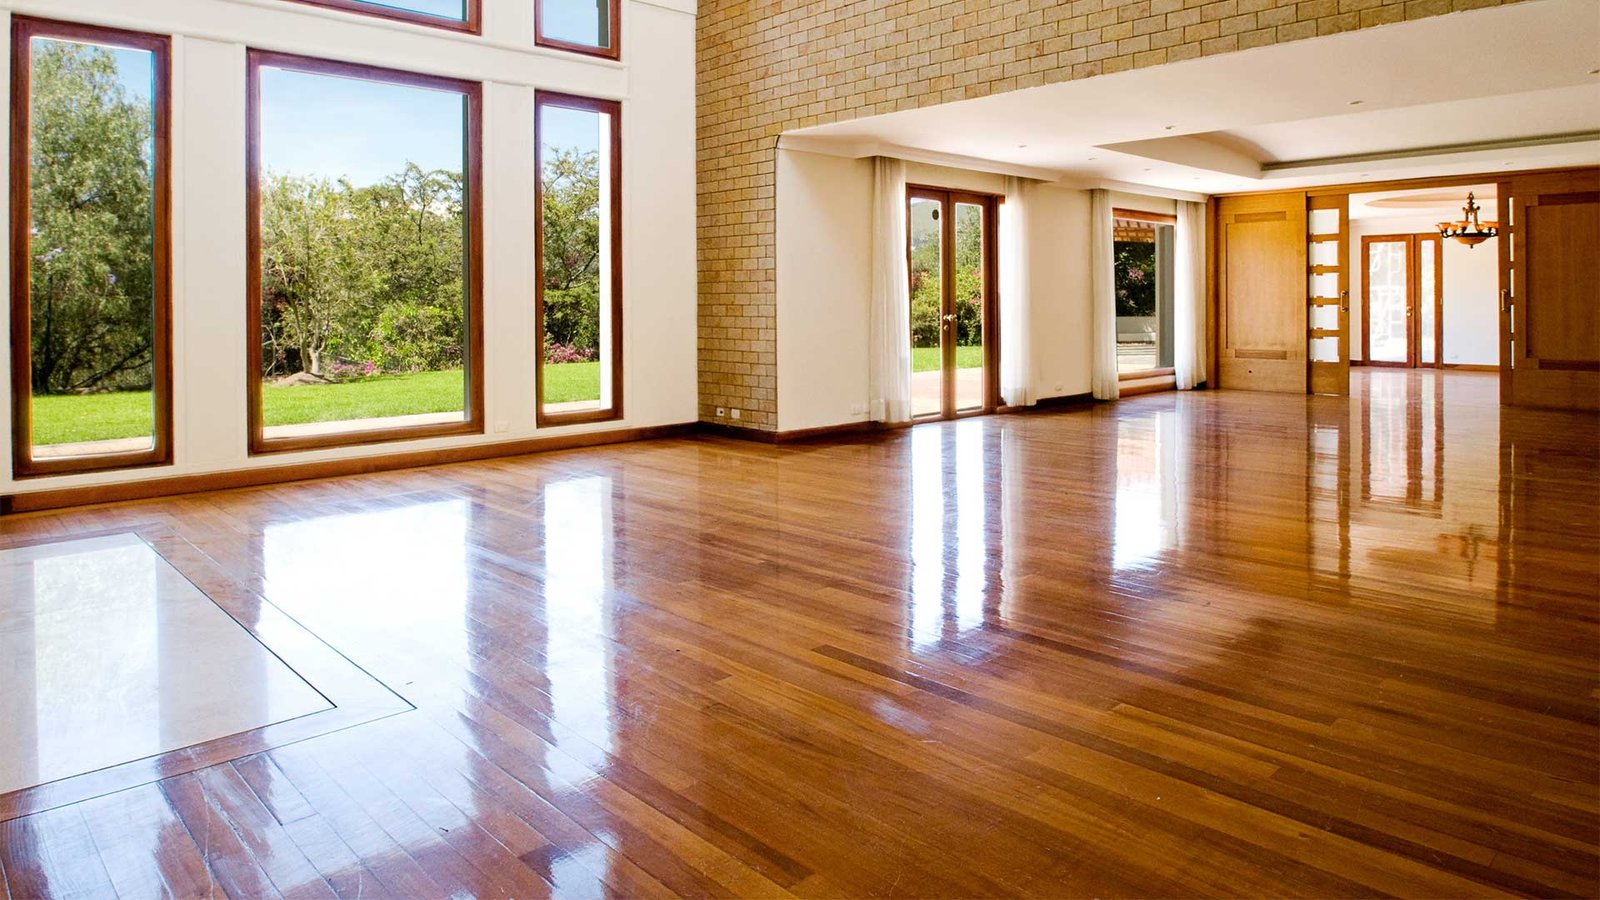 Key Considerations When Selecting Your Floor Sanding Contractor